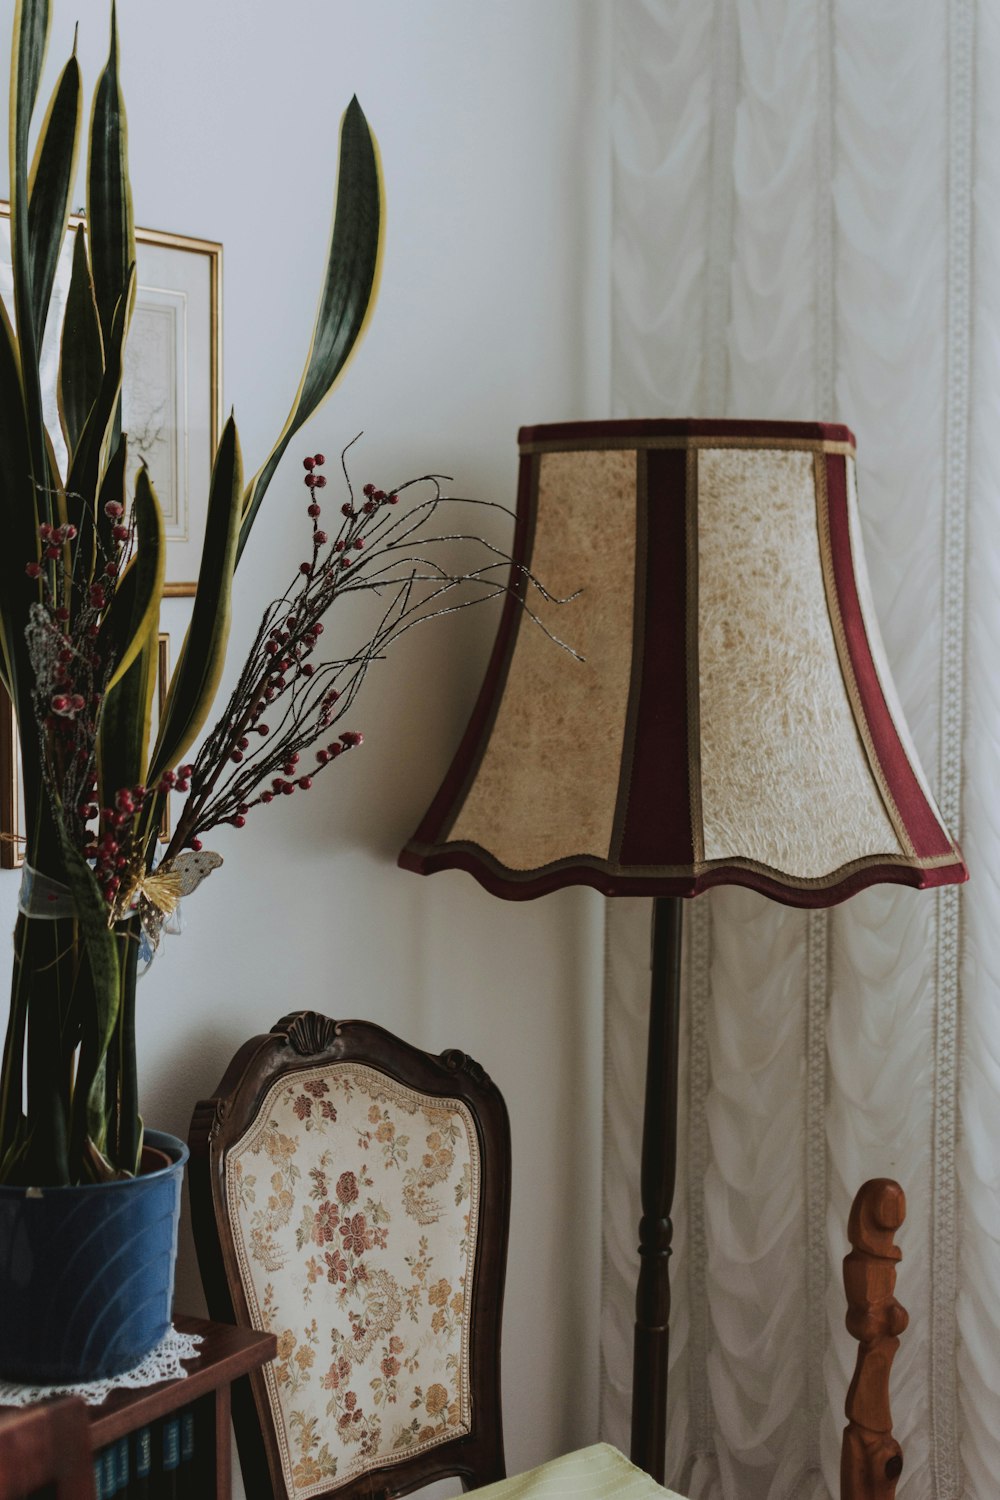 Beige-maroon floor lamp by curtain panel photo – Free Grey Image on Unsplash